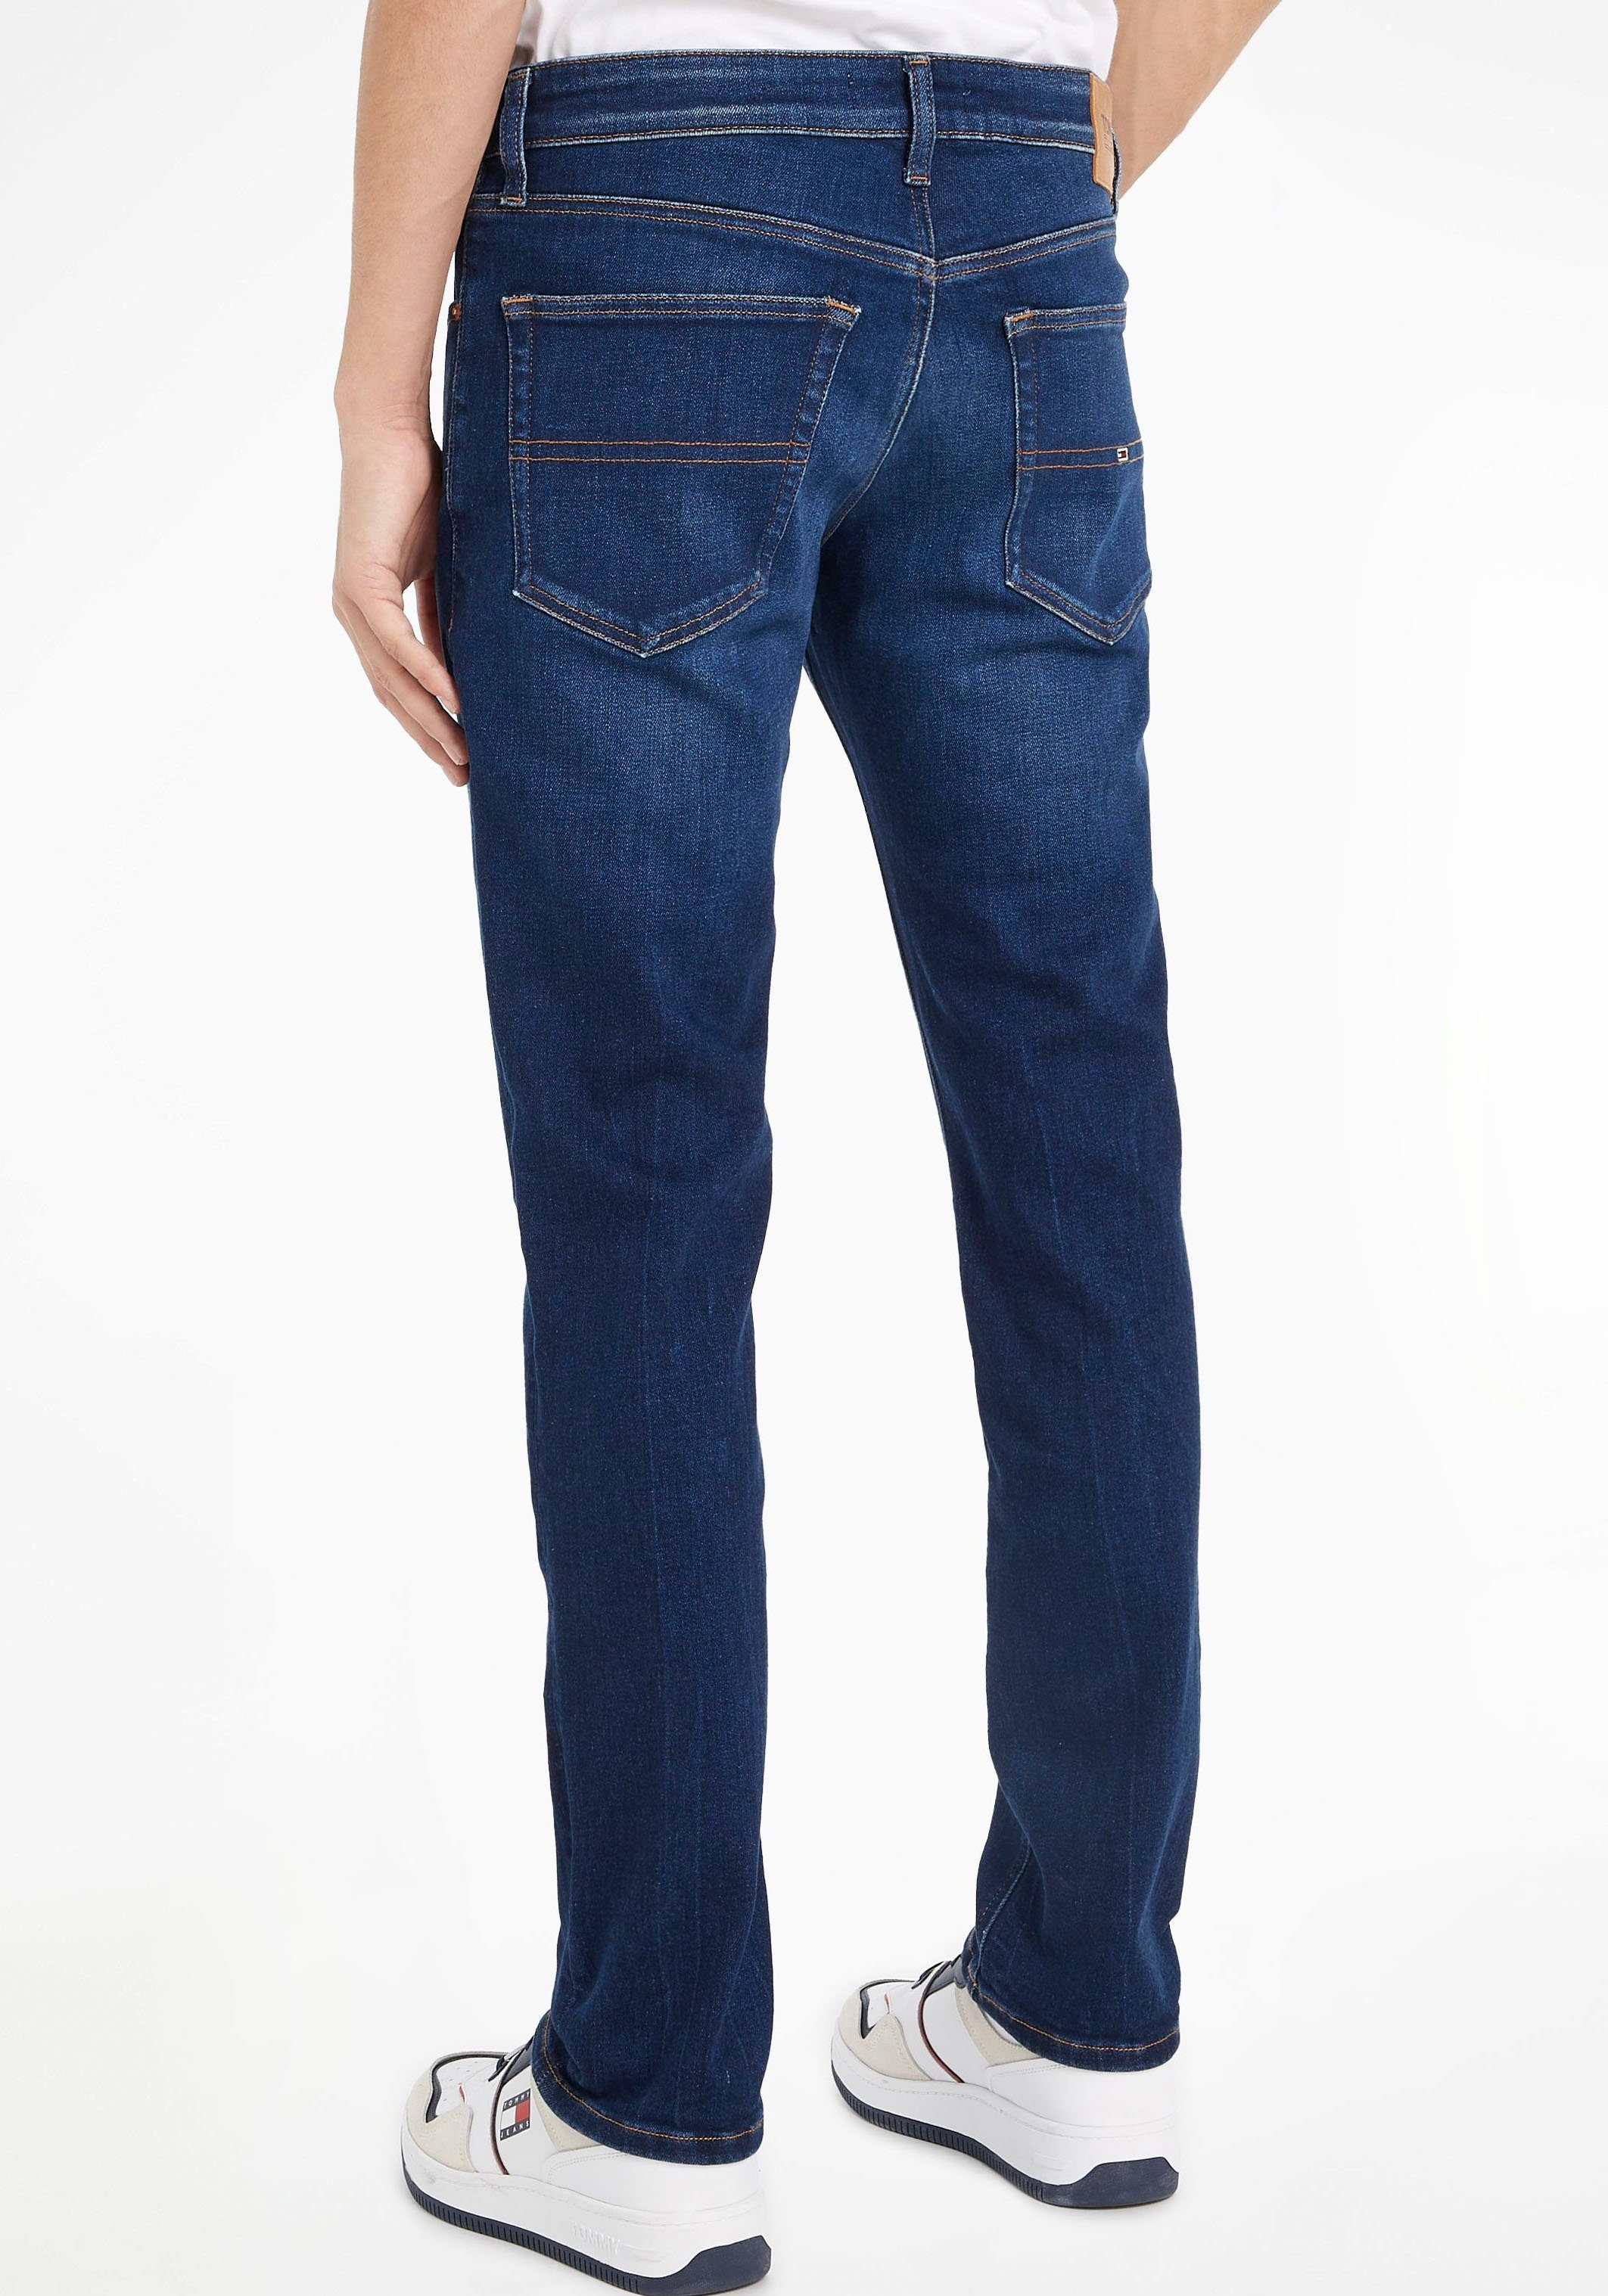 5-Pocket-Jeans Tommy SLIM Dark 1BK Denim SCANTON Jeans